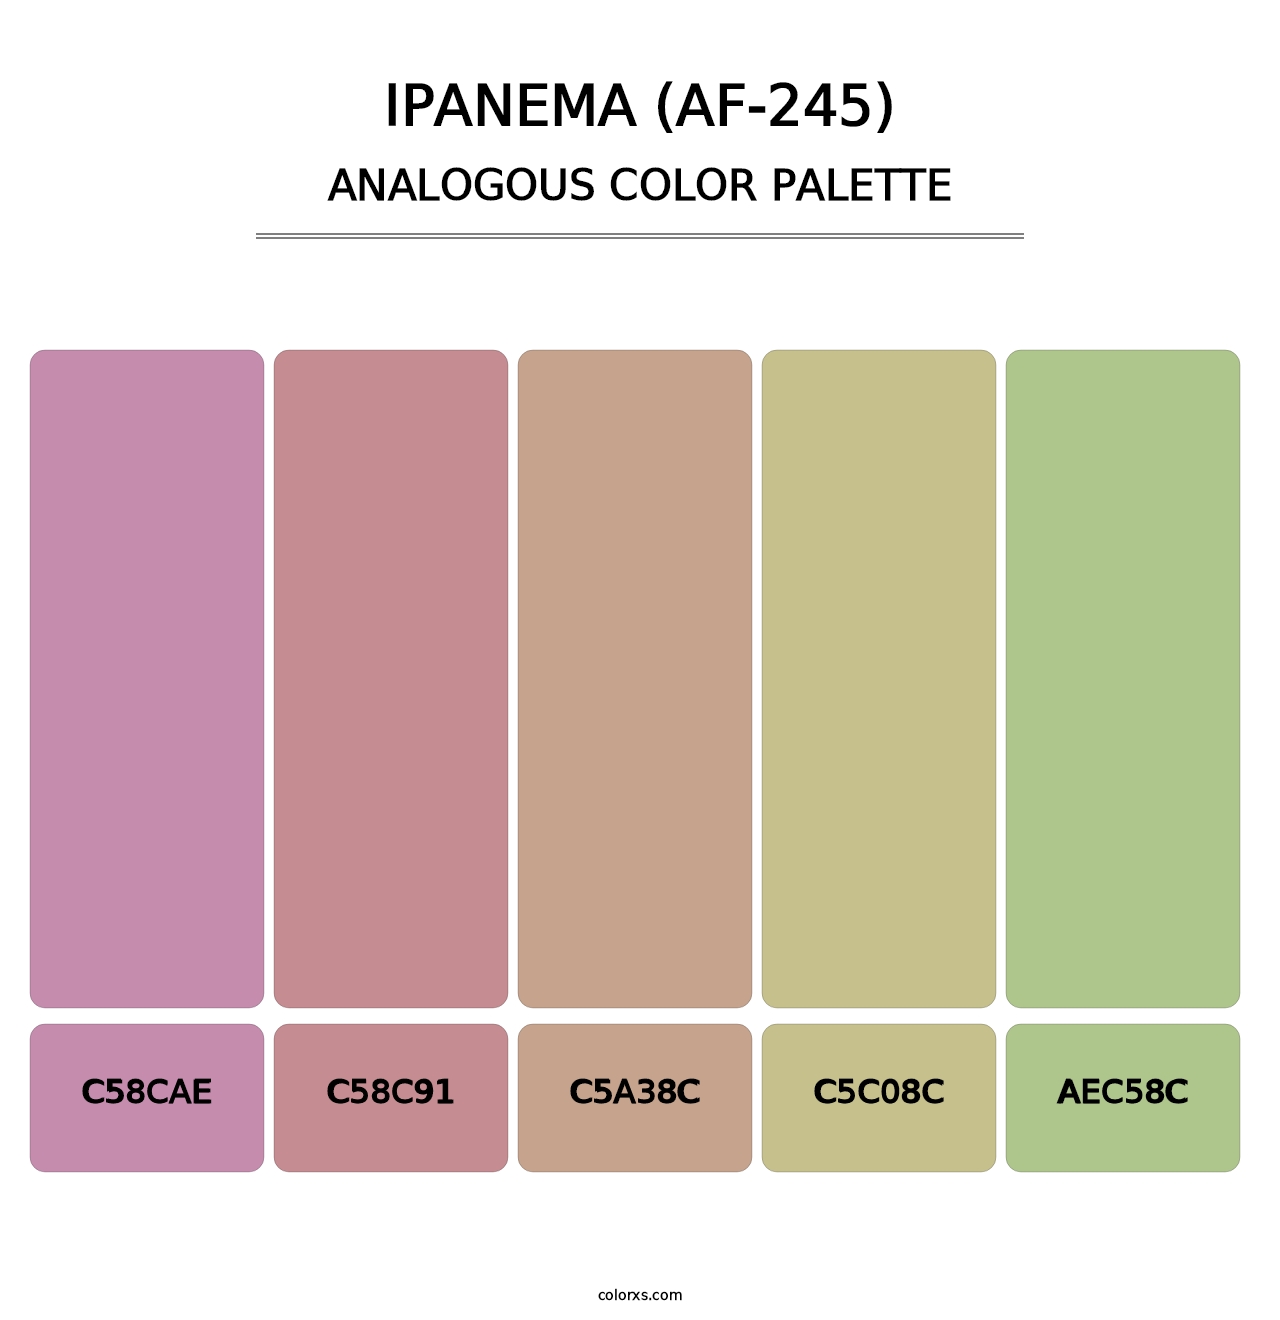 Ipanema (AF-245) - Analogous Color Palette